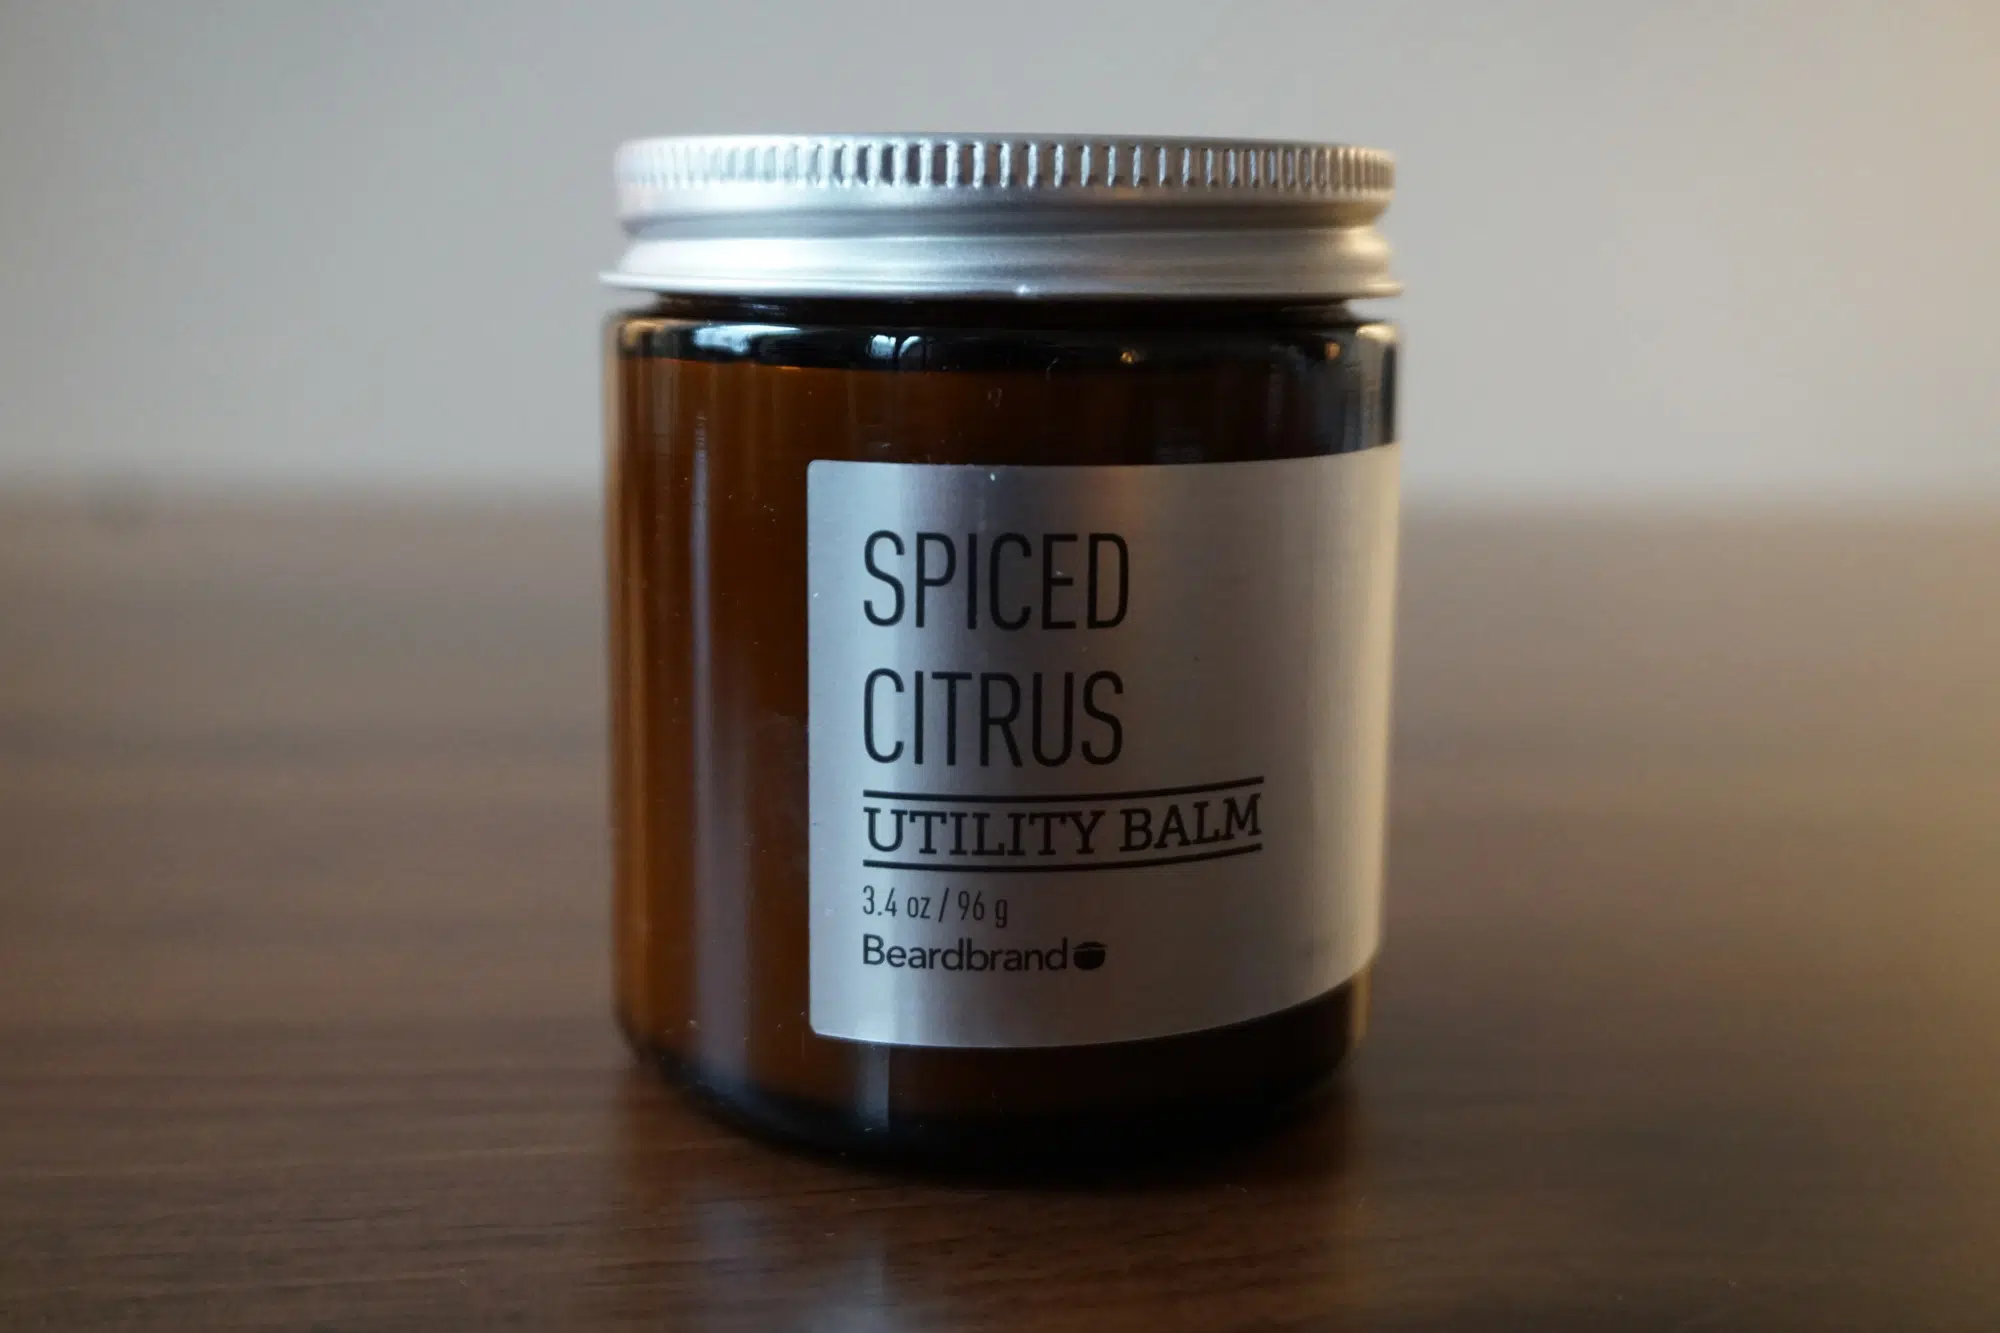 Beardbrand spiced citrus utility balm